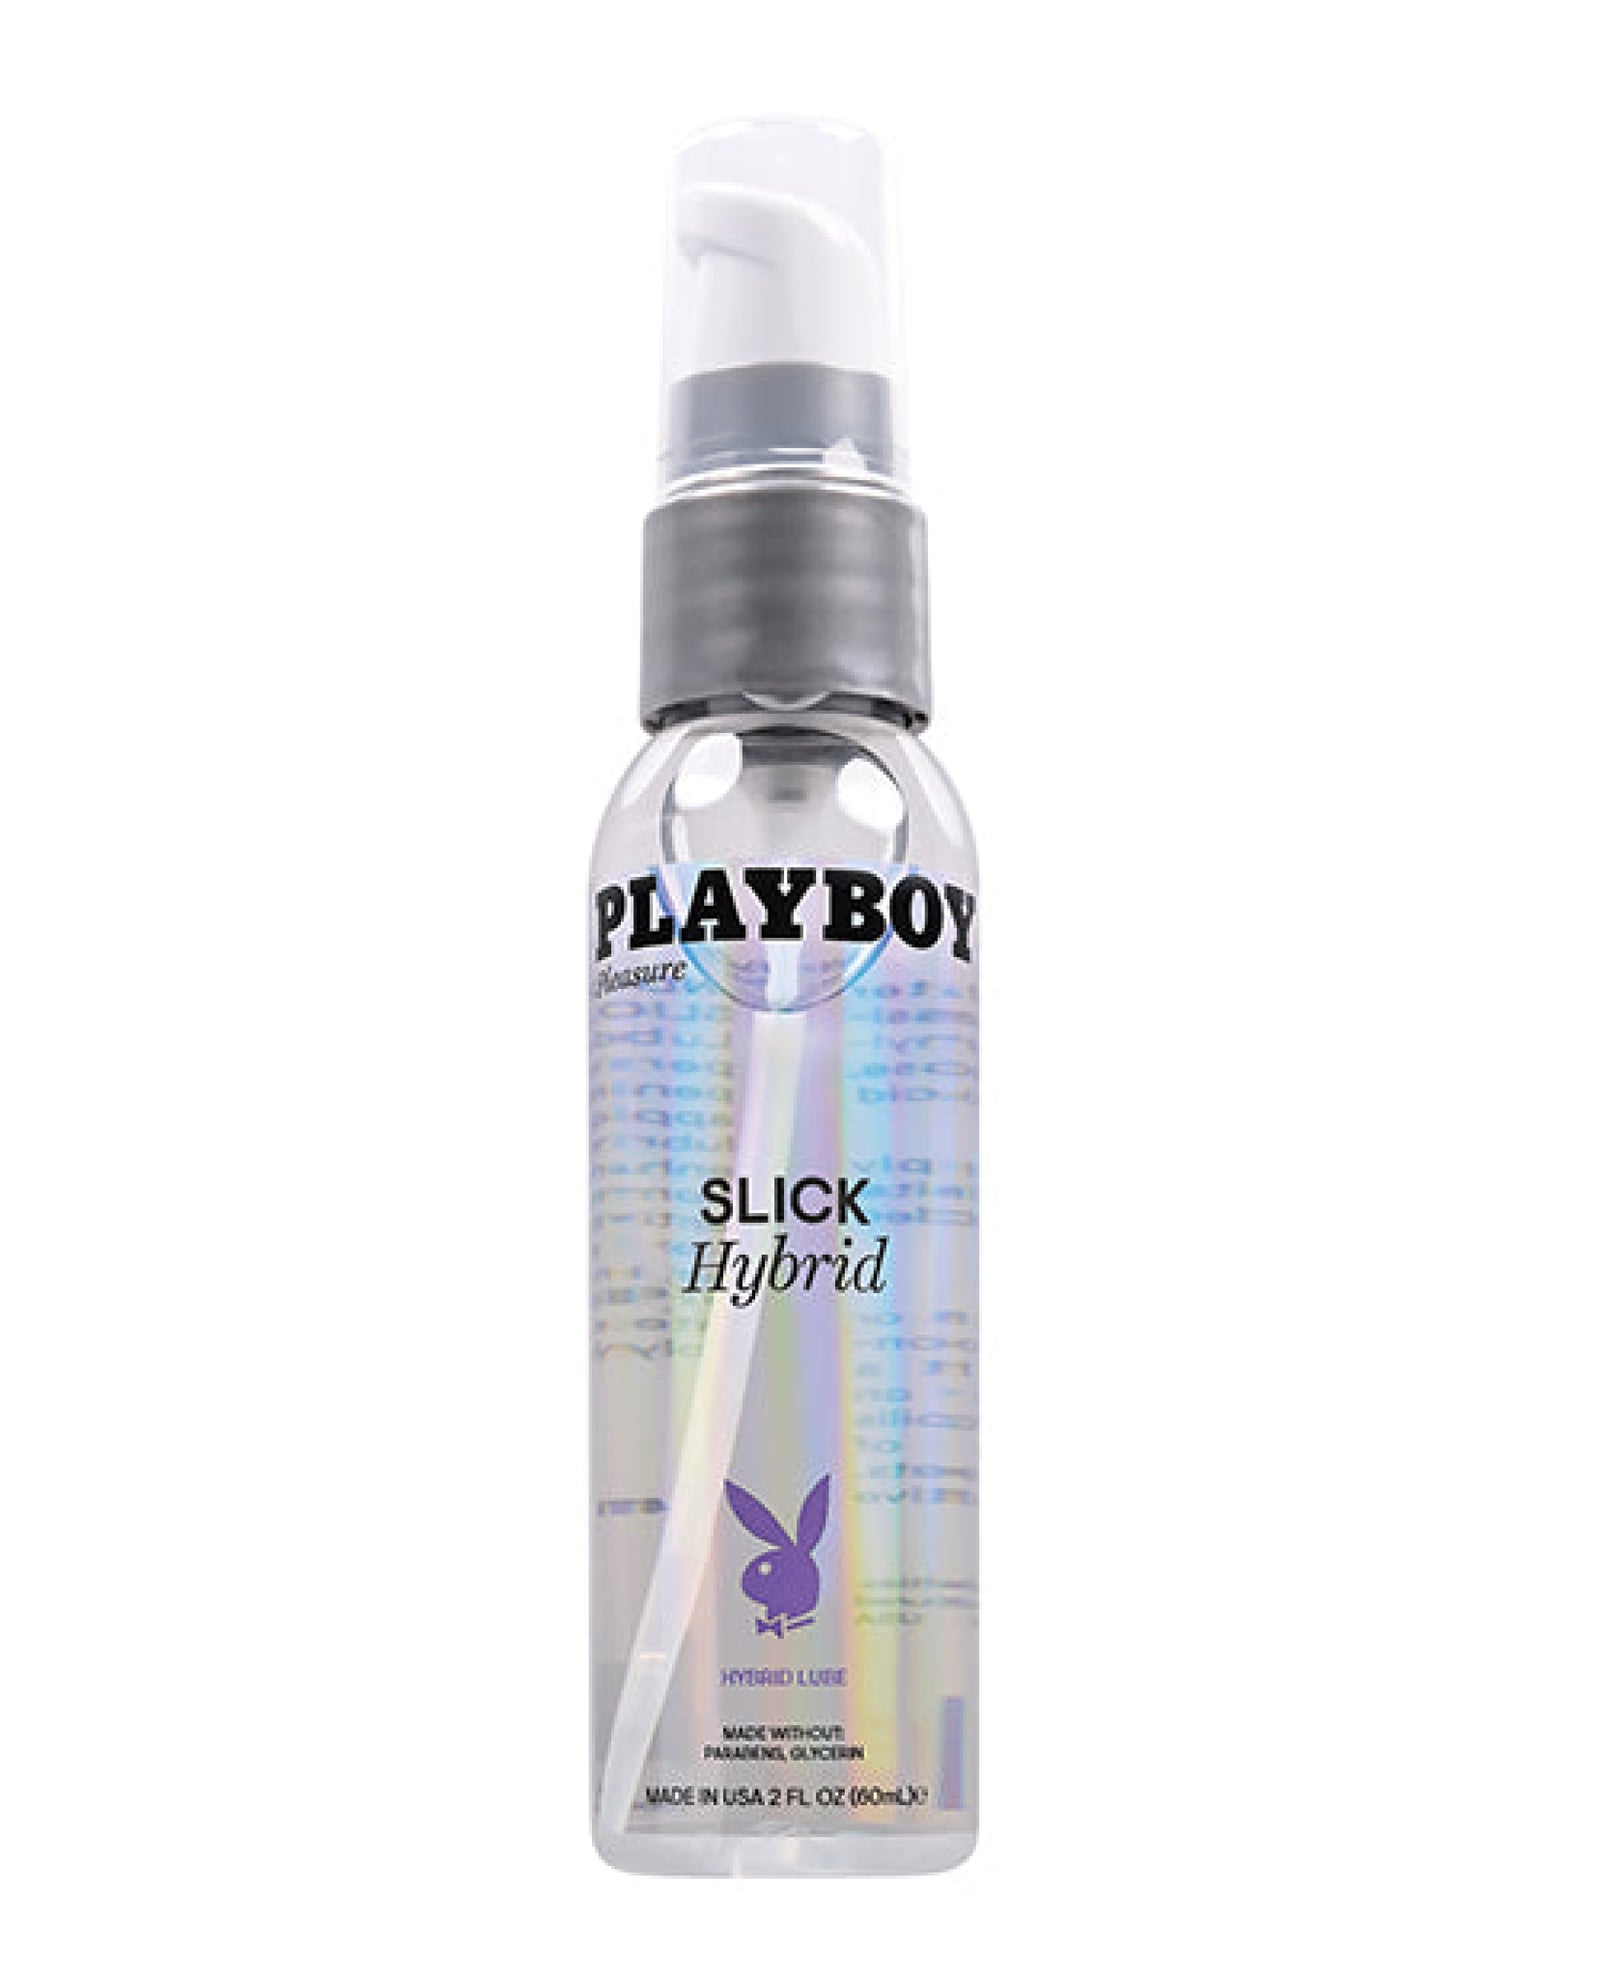 Playboy Pleasure Slick Hybrid Lubricant - Oz Playboy